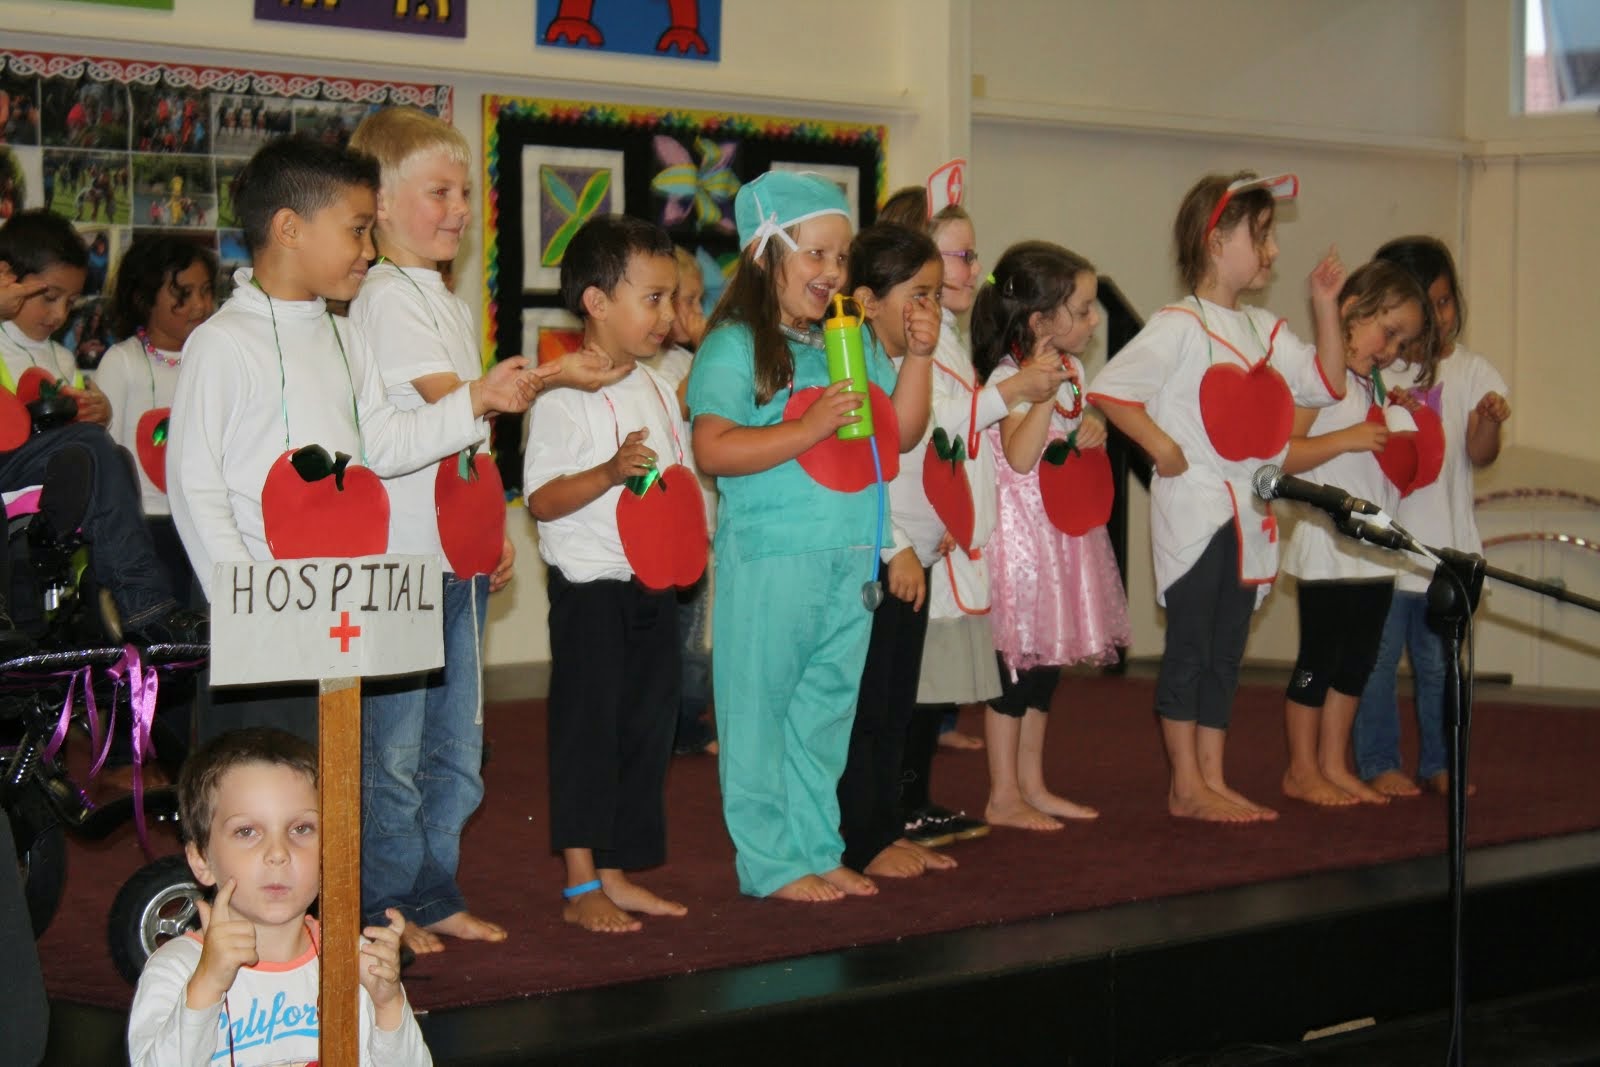 B6 children in the finals of the School Talent Quest.